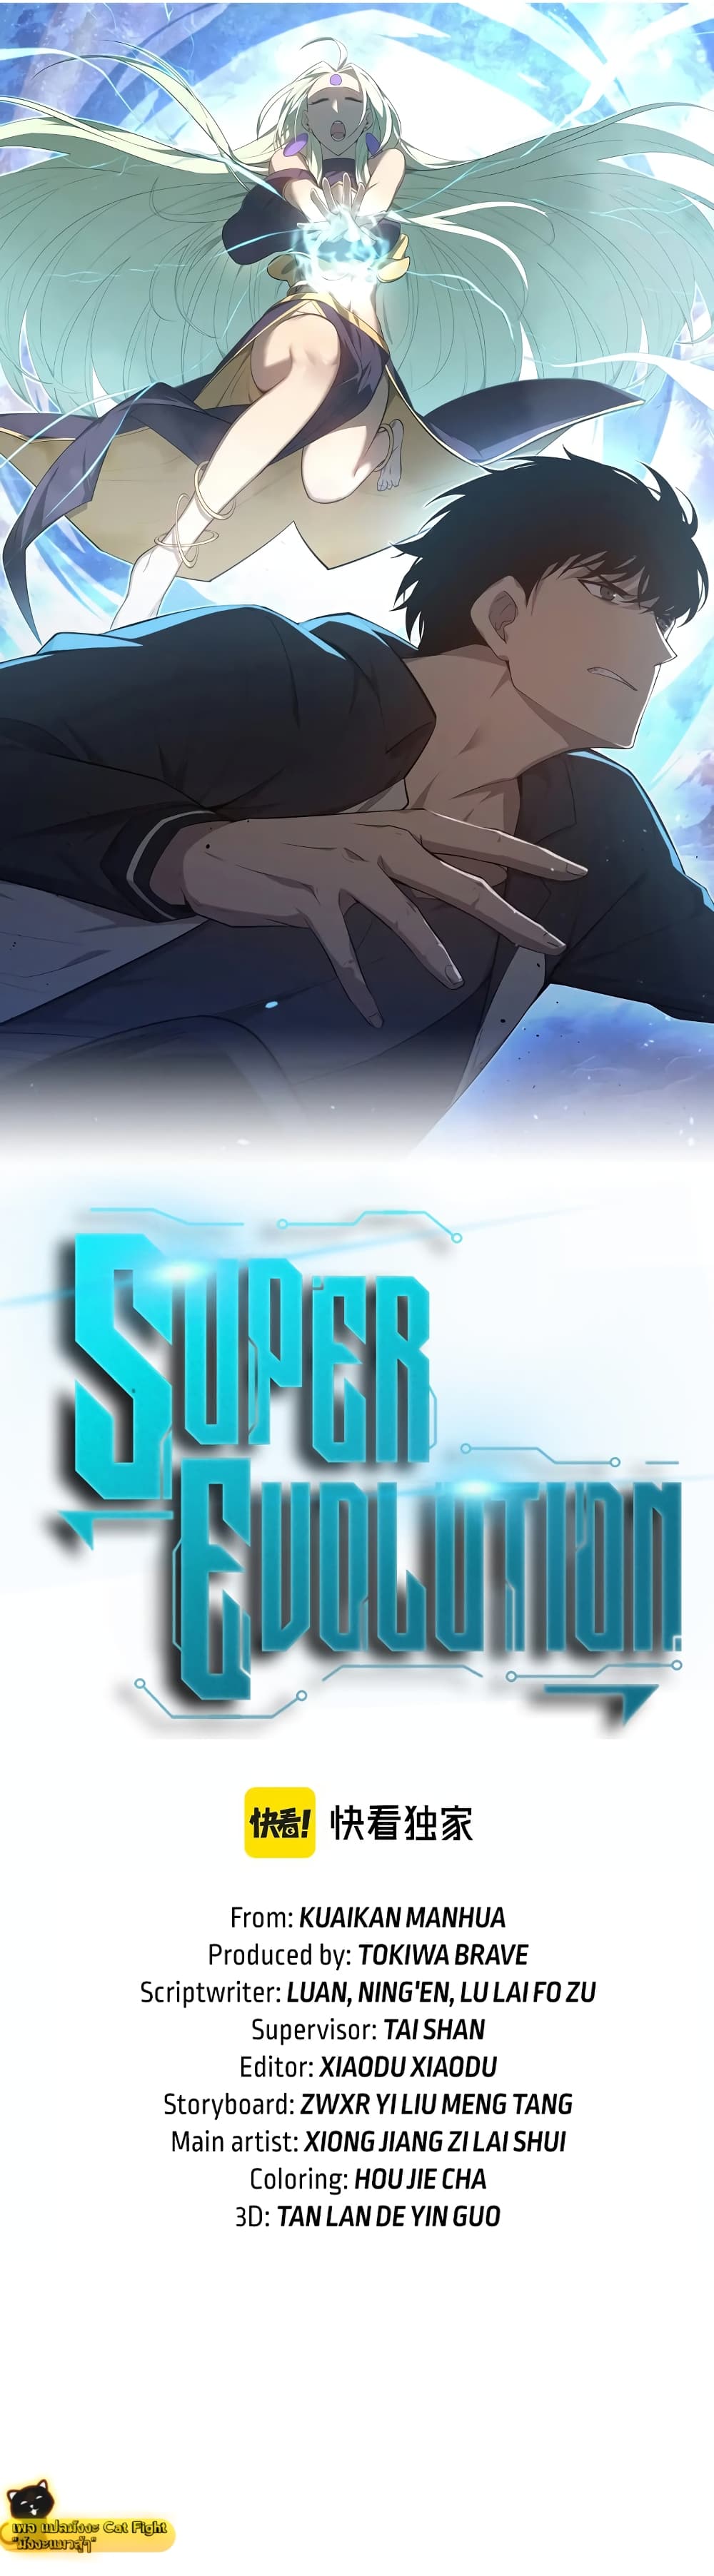 Super Evolution 89-89